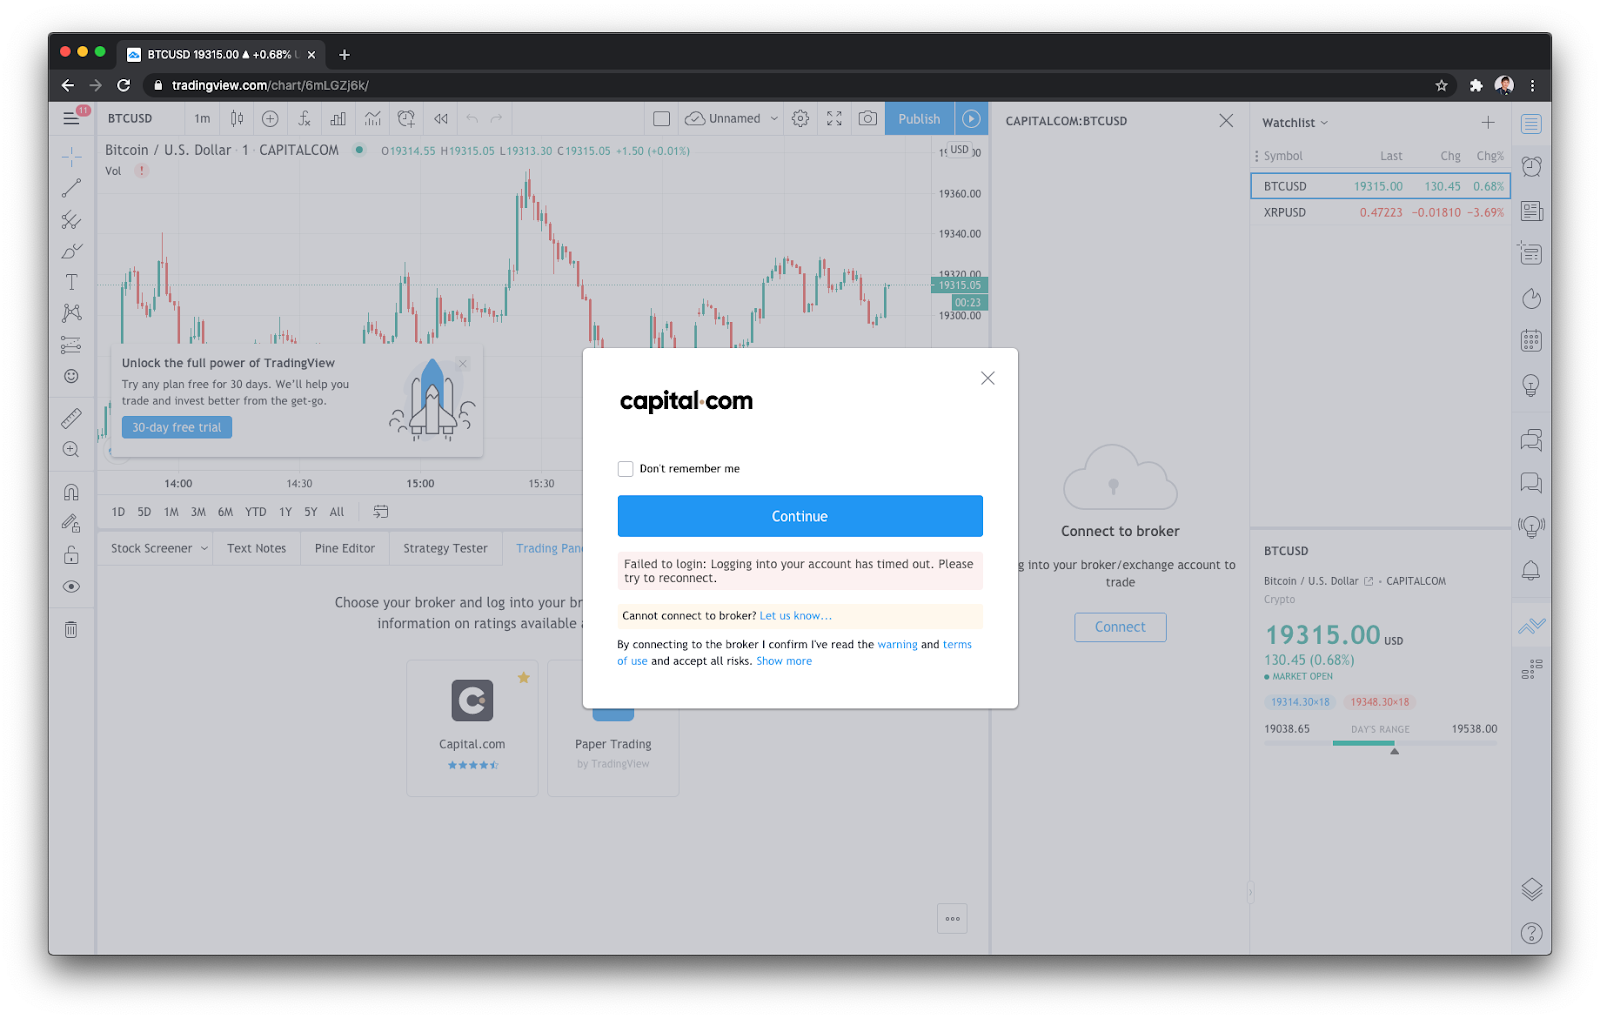 Capital.com is now live on TradingView | Capital.com